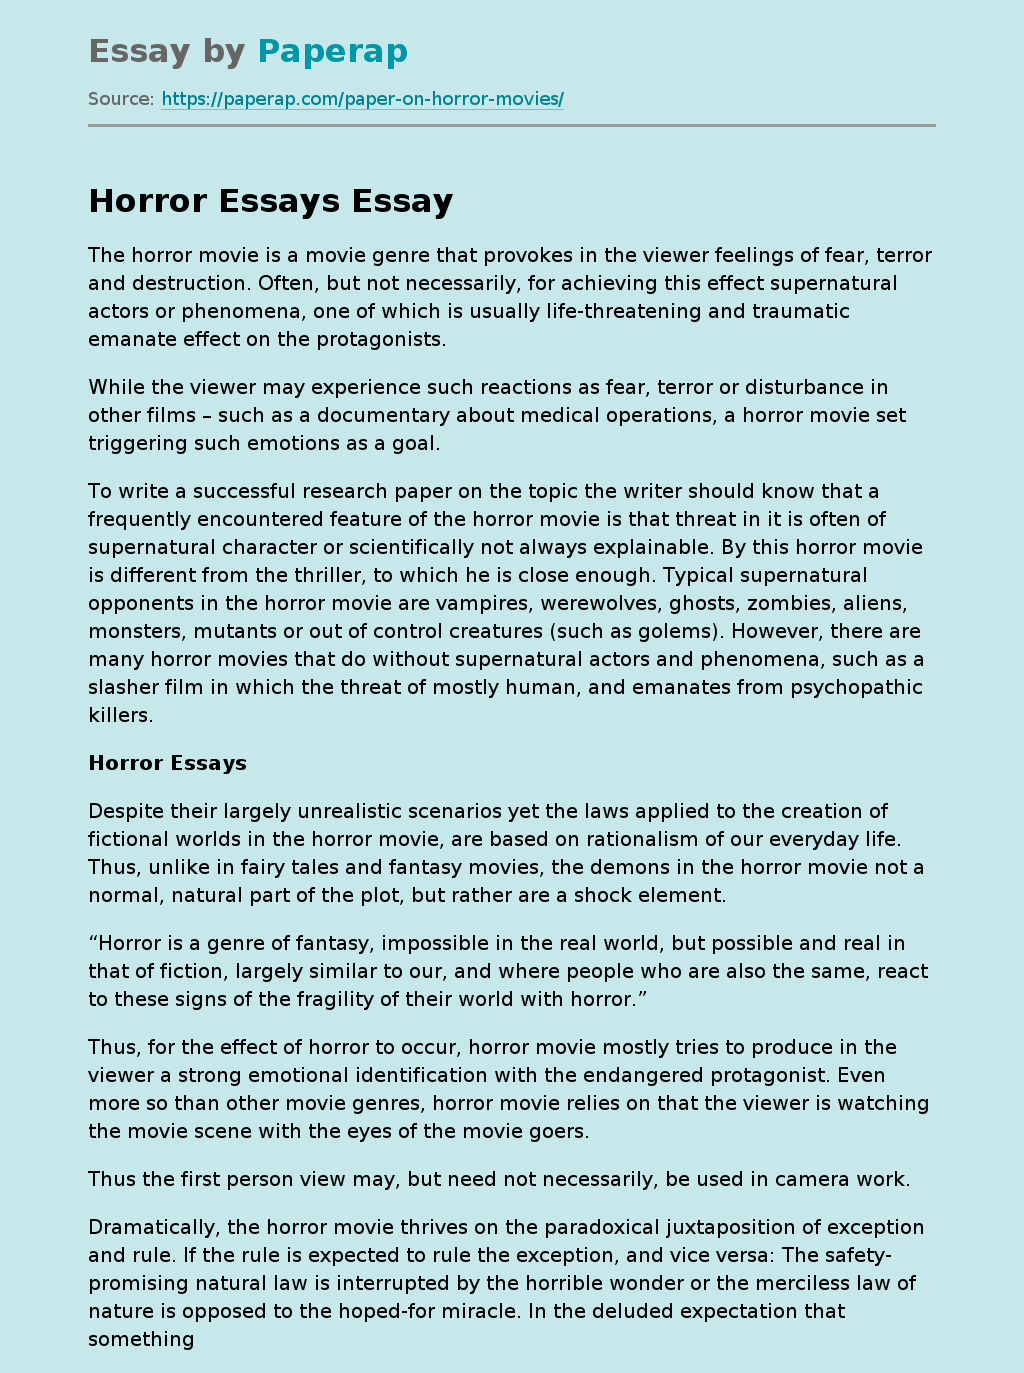 horror genre definition essay